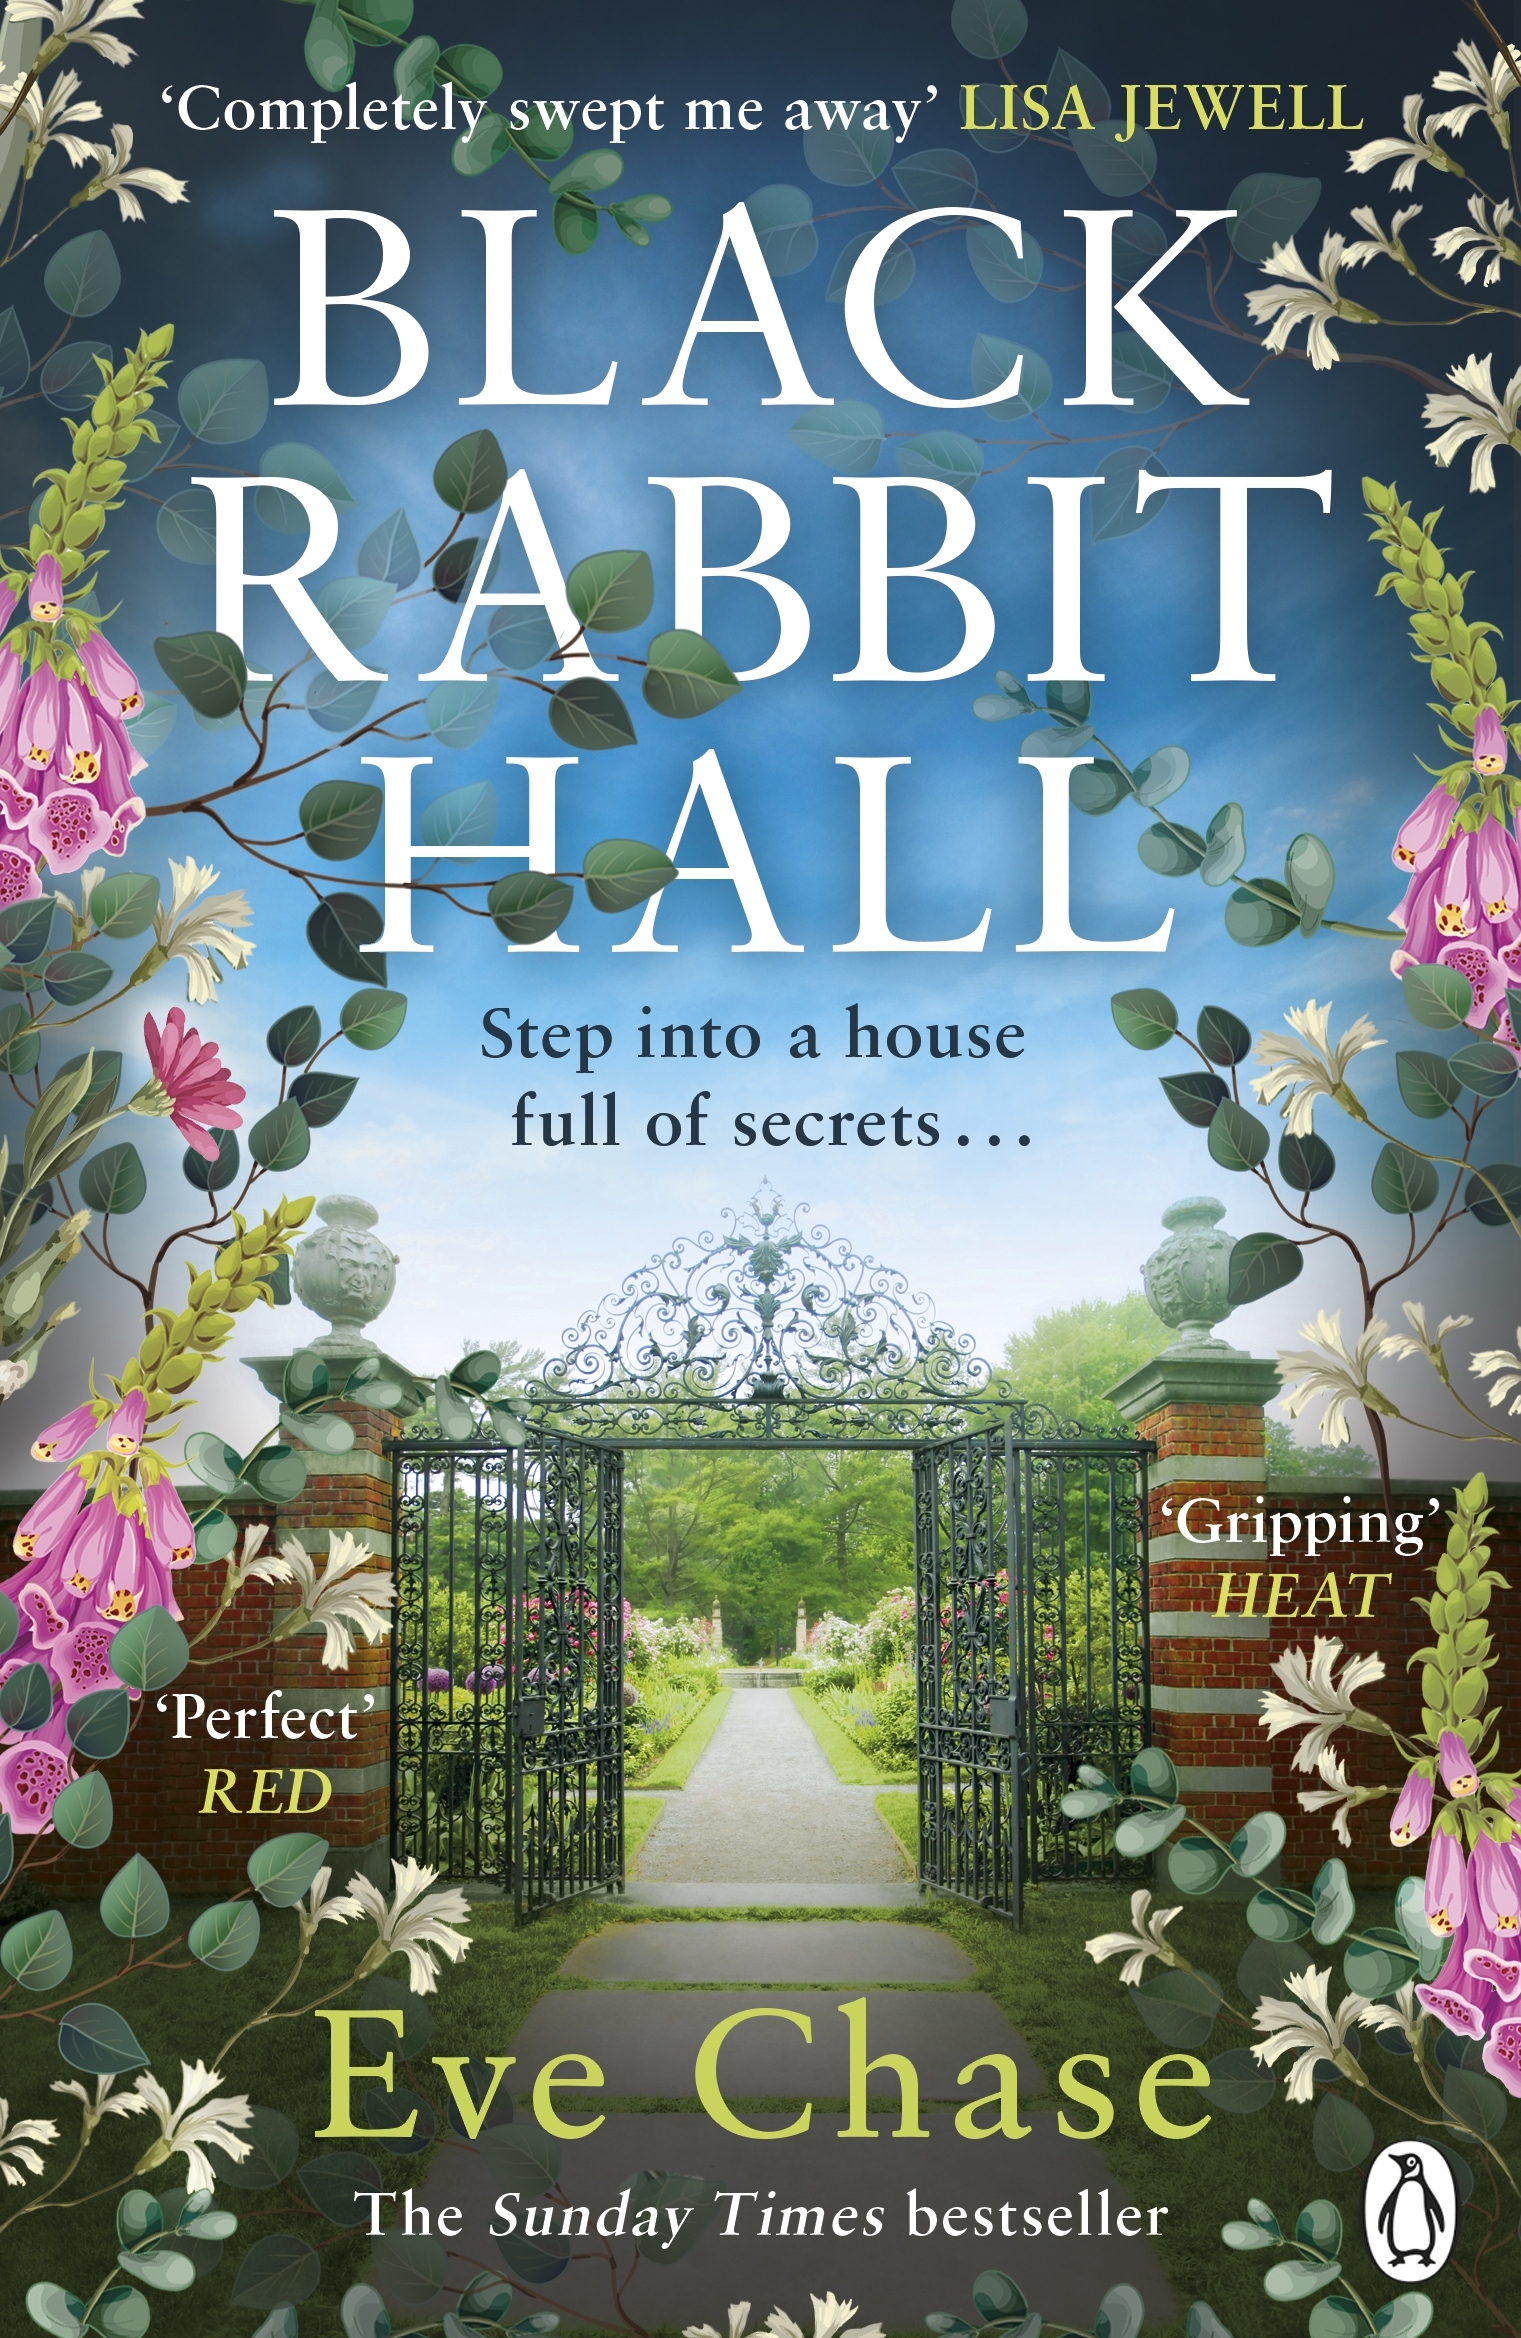 Rabbit hall